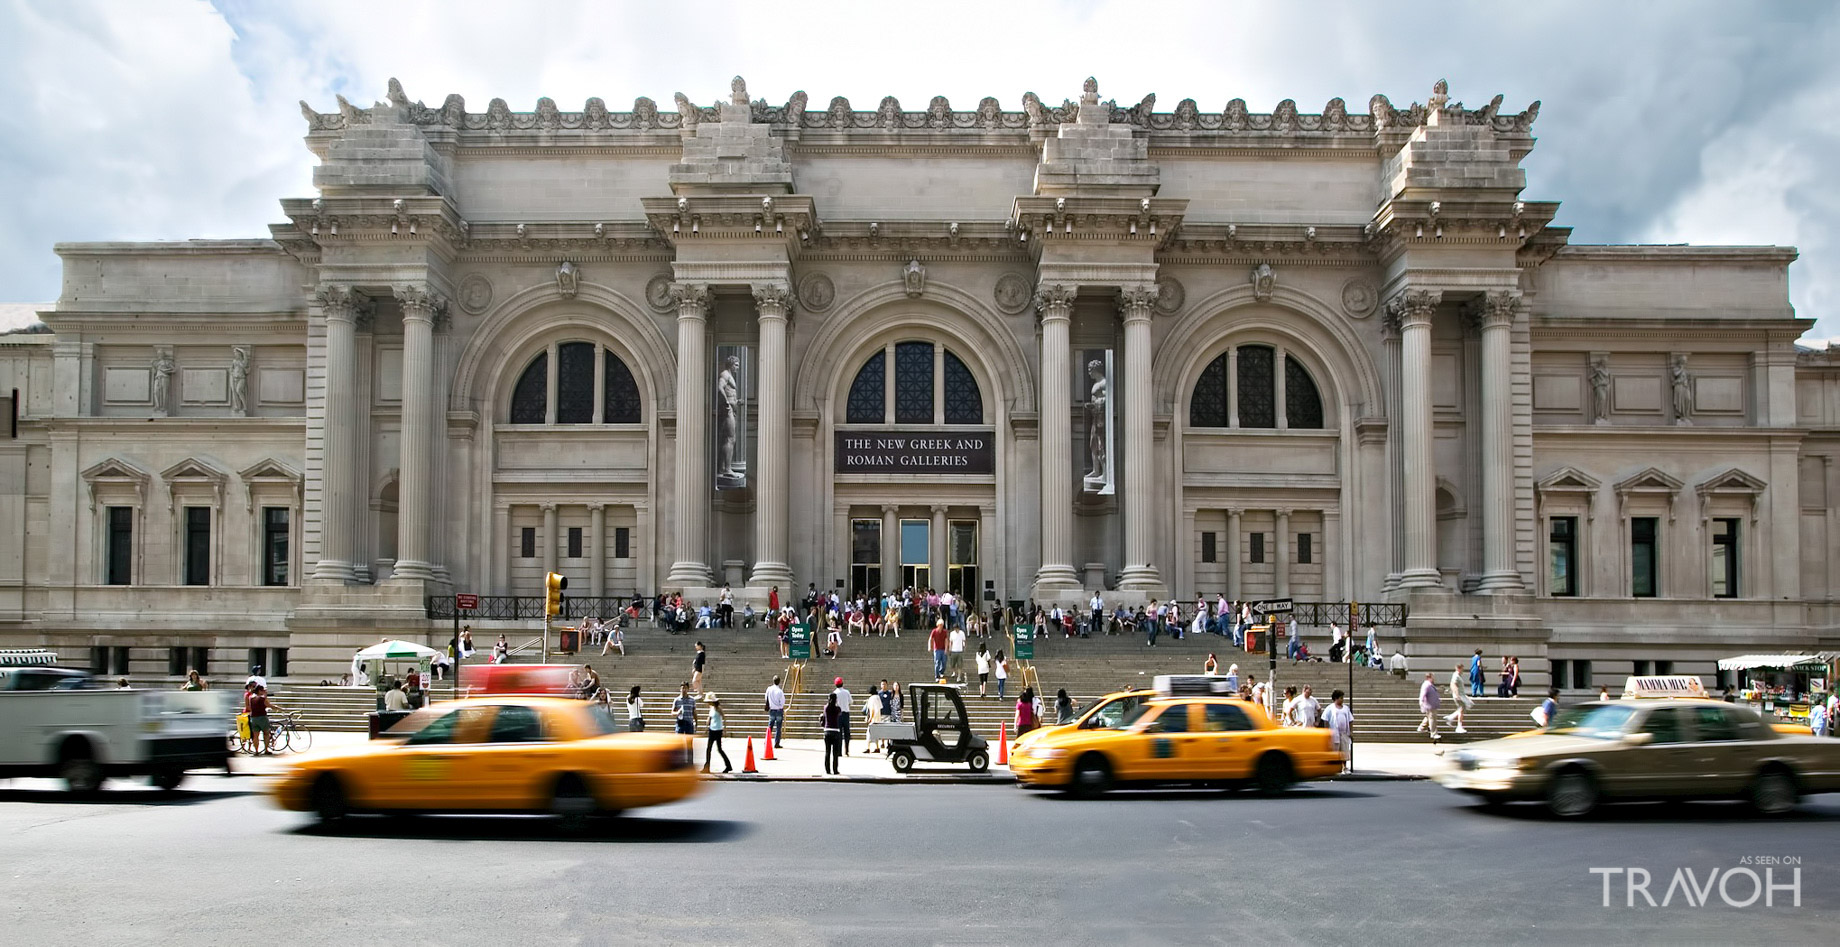 Metropolitan Museum – 1000 Fifth Ave, New York, NY